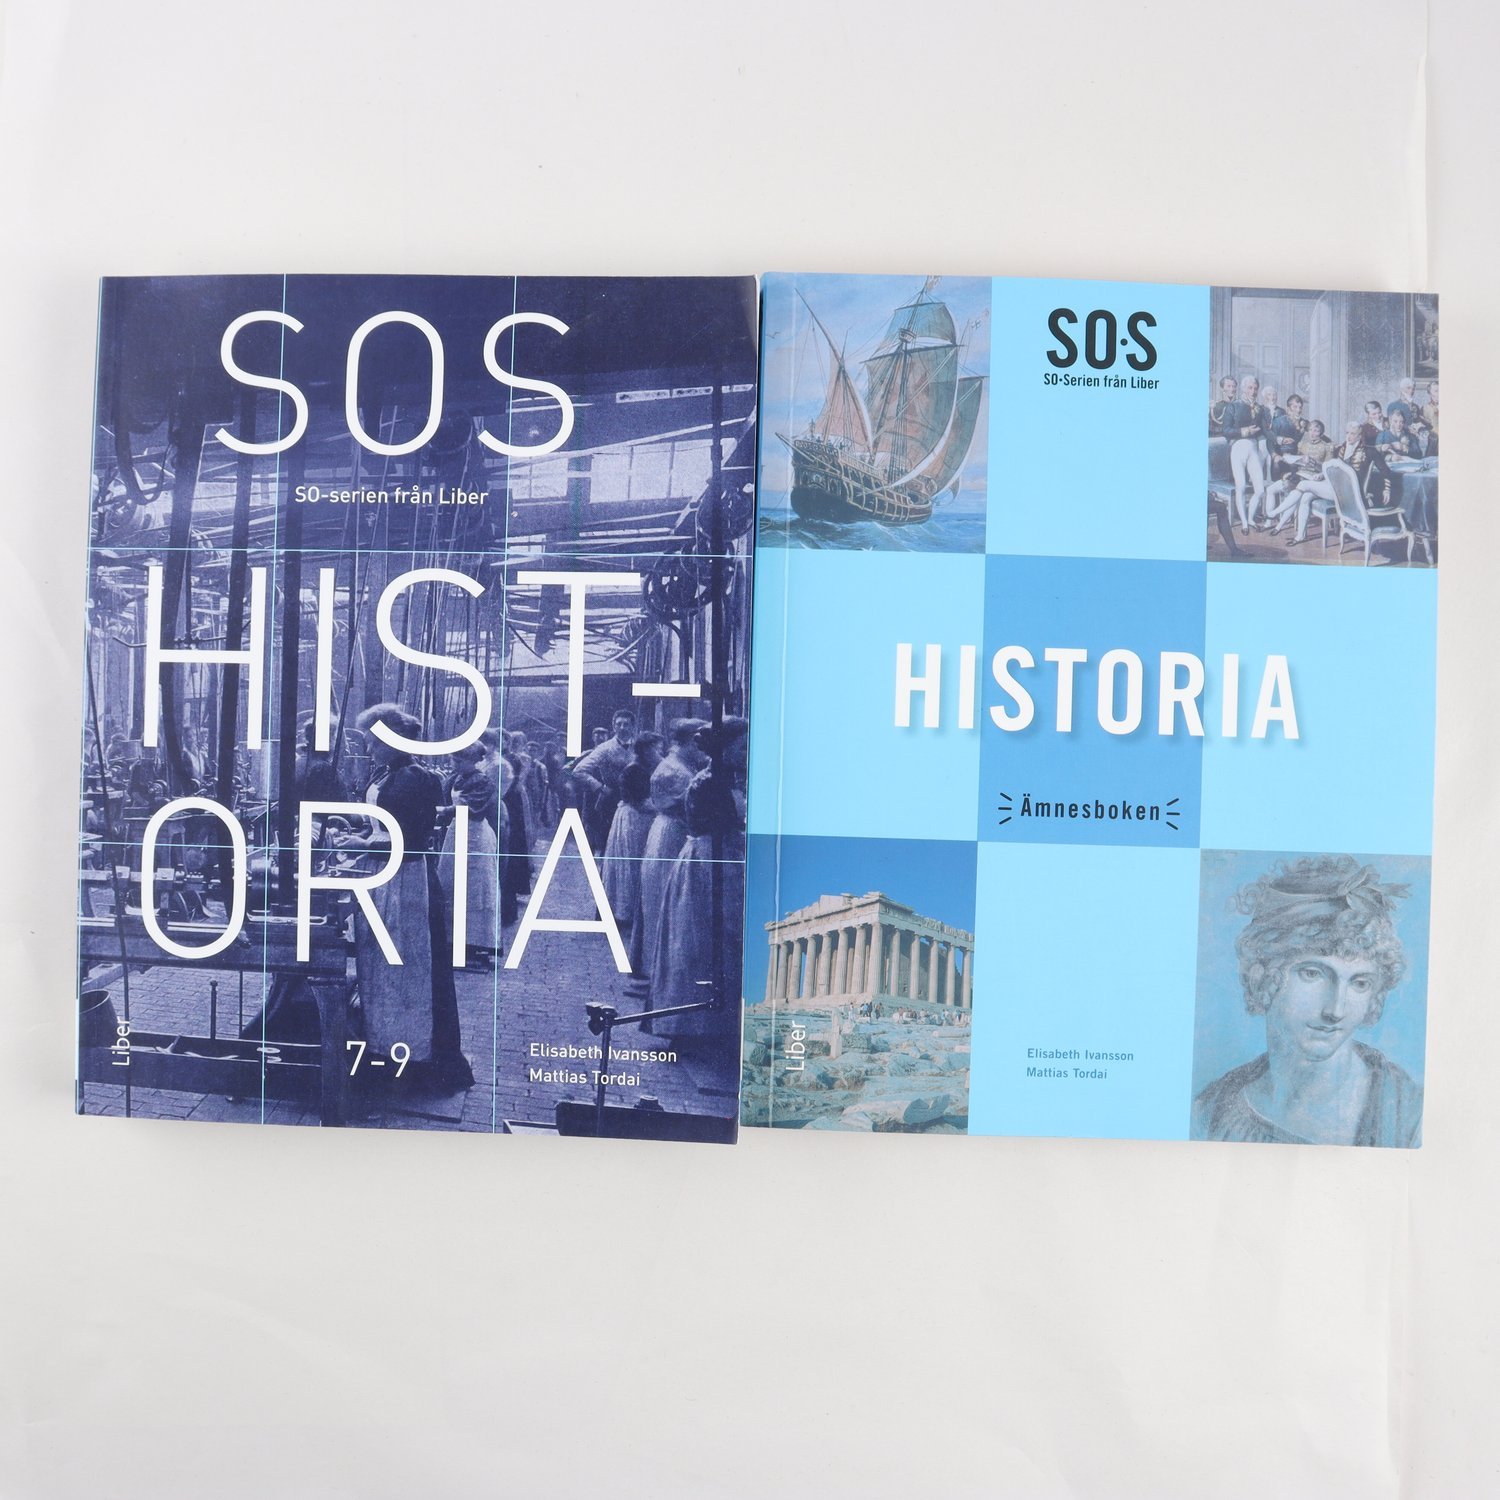 SOS Historia 7-9 + Ämnesboken, Elisabeth Ivansson & Mattias Tordai